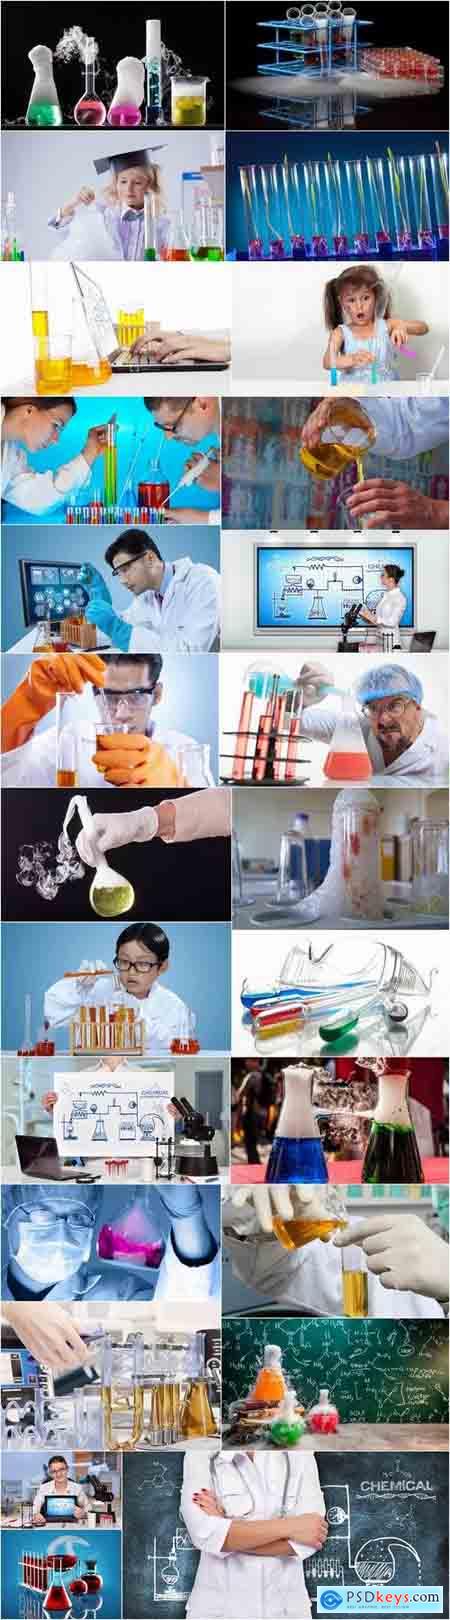 Chemist chemical reaction laboratory glassware chemical reagent 25 HQ Jpeg